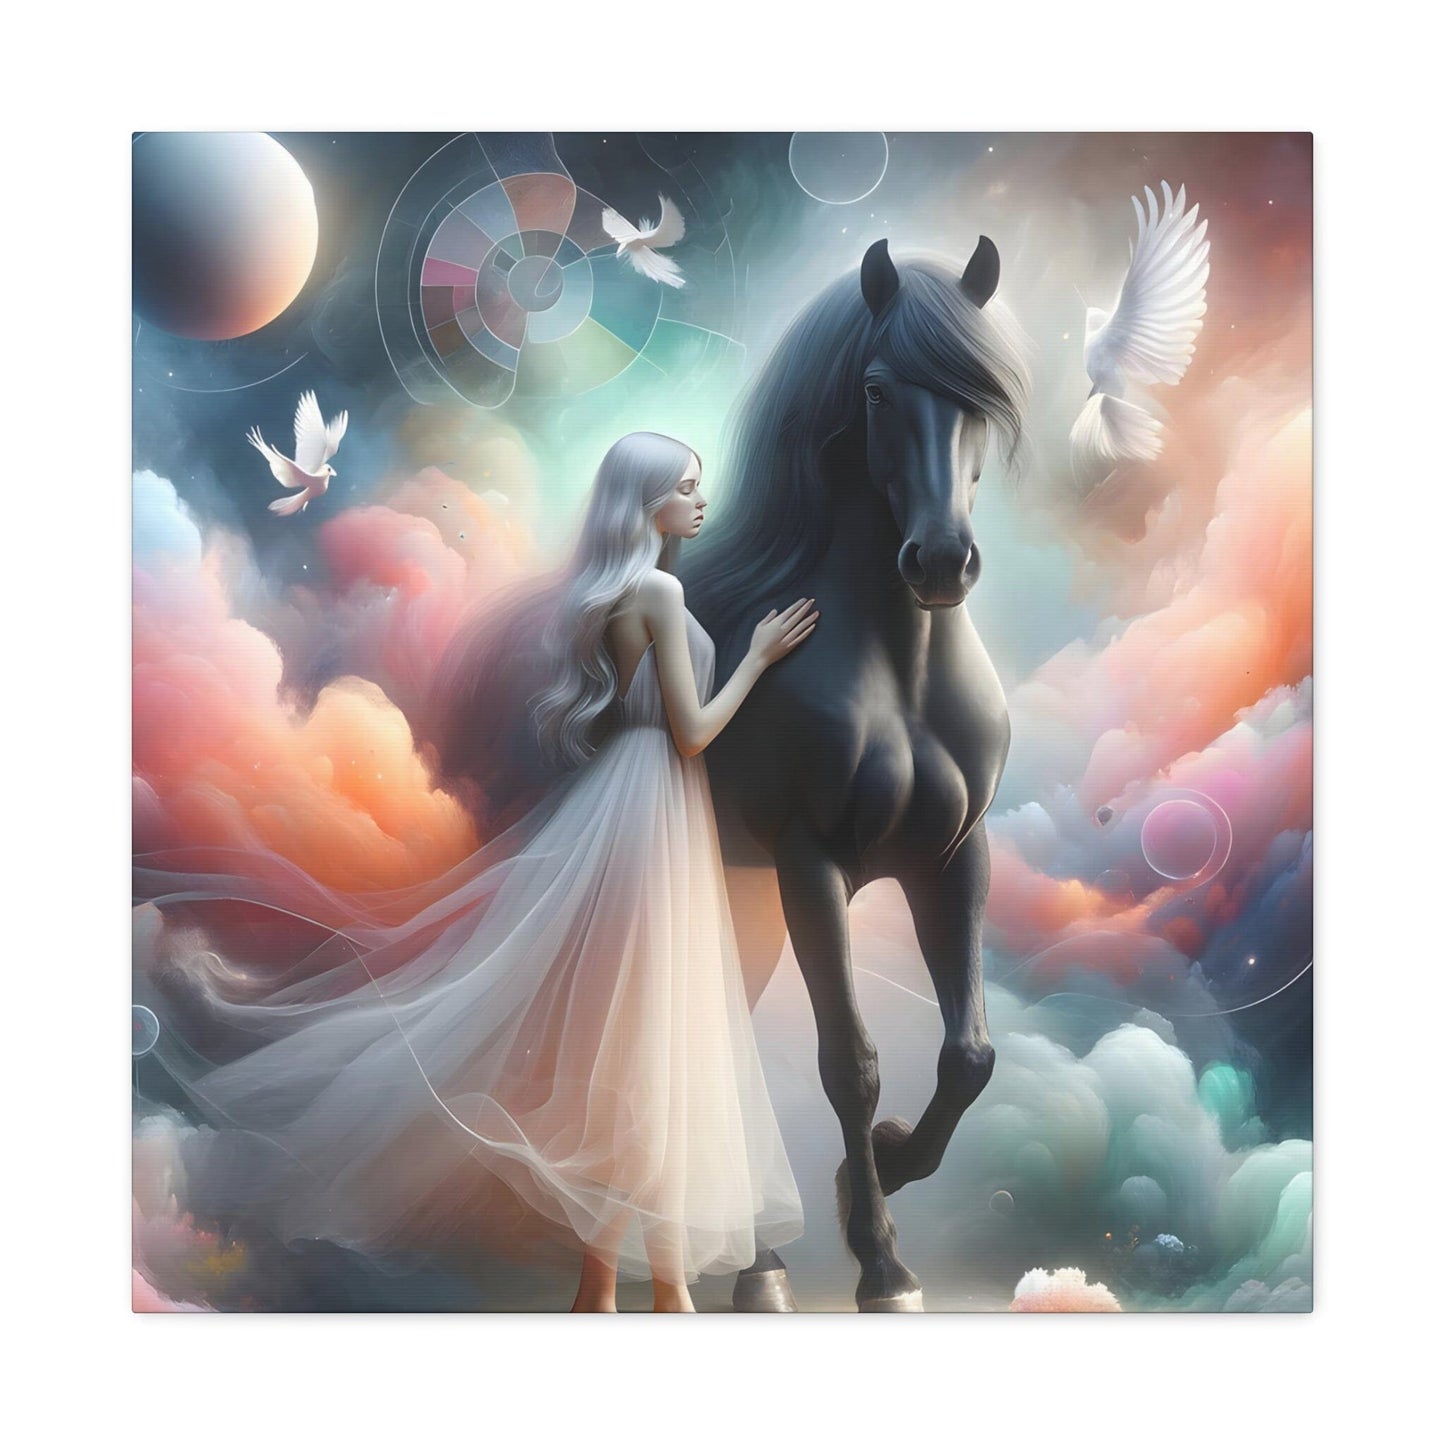 Celestia Dreamweaver, Ethereal Bonds. Exclusive Canvas Print